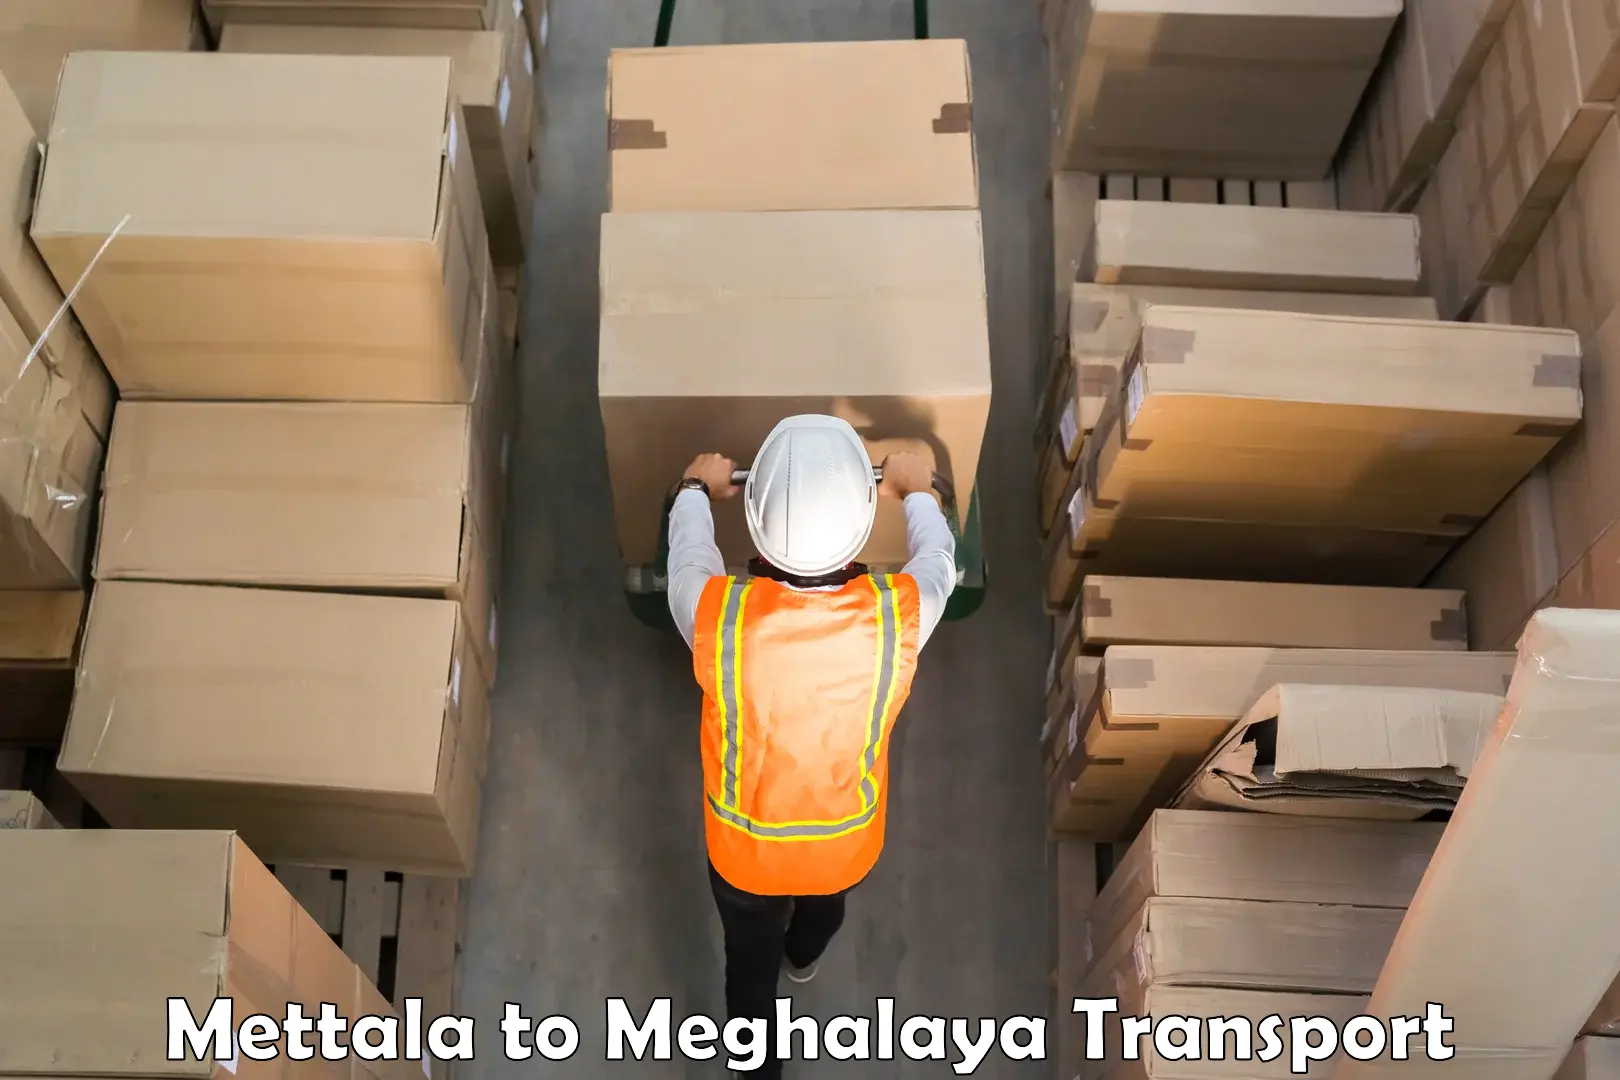 Transport in sharing Mettala to Meghalaya